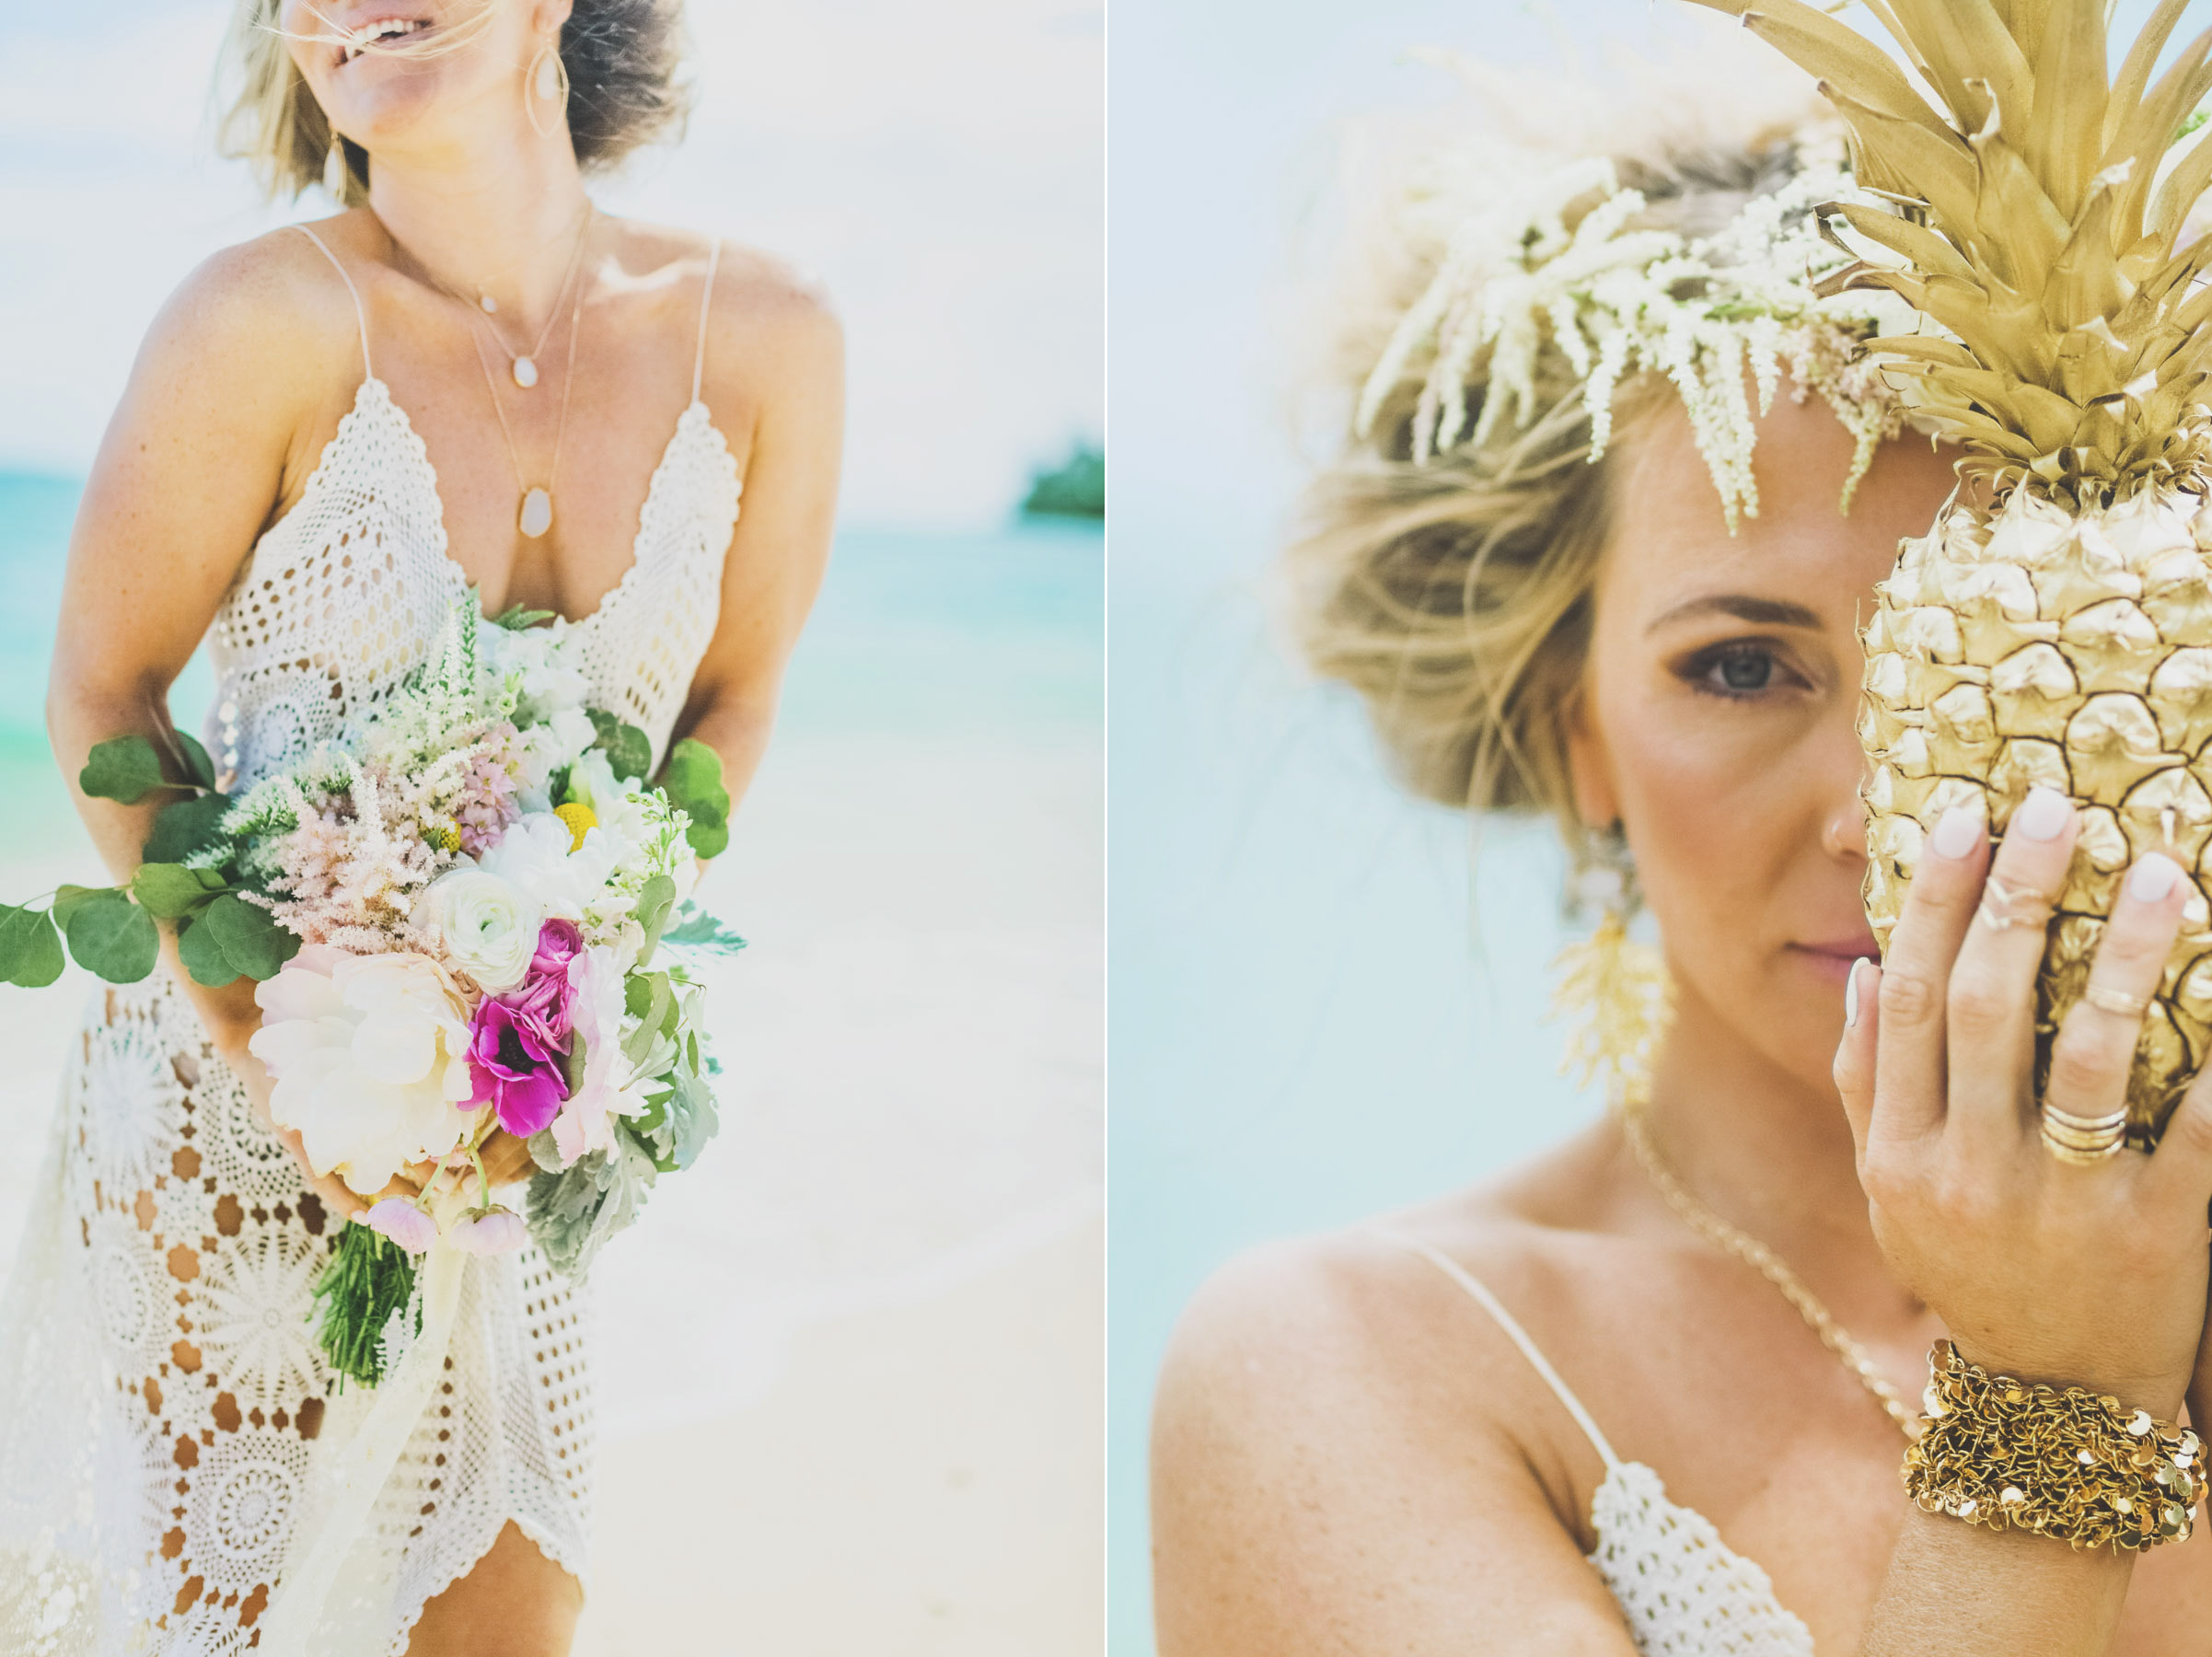  Maui bridal bohemian chic wedding inspiration
 